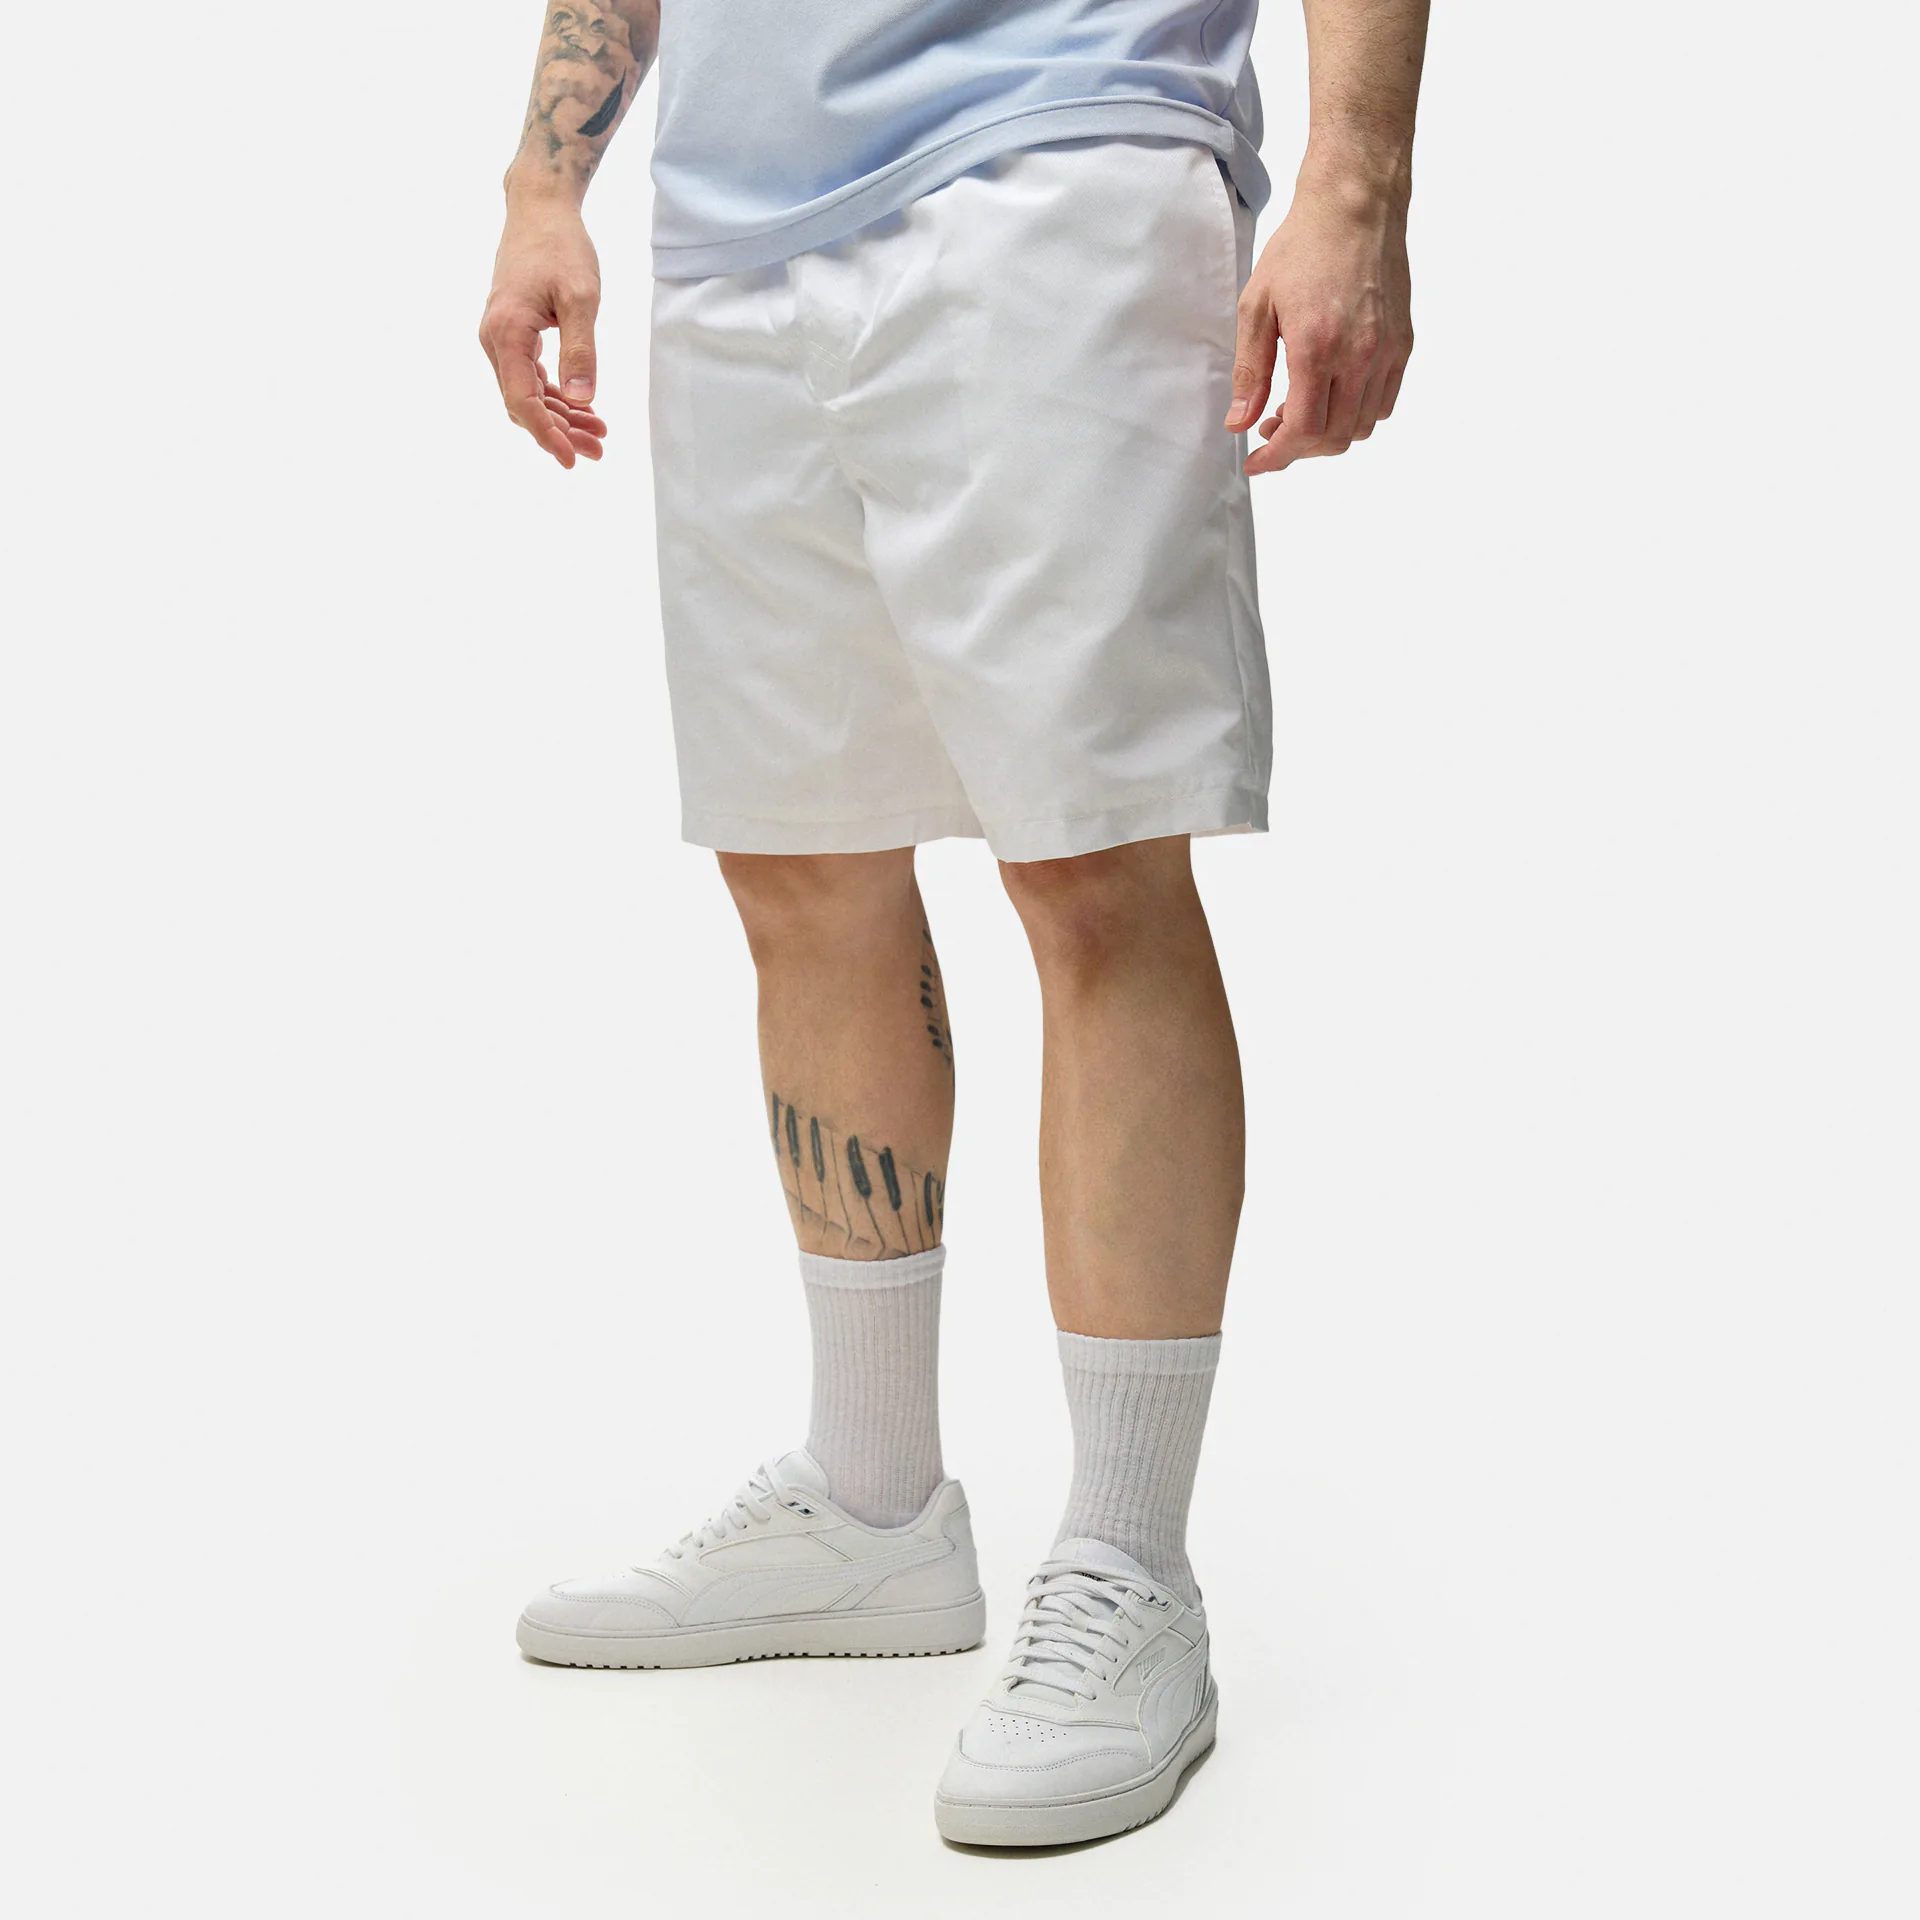 Lacoste Tennis Shorts White